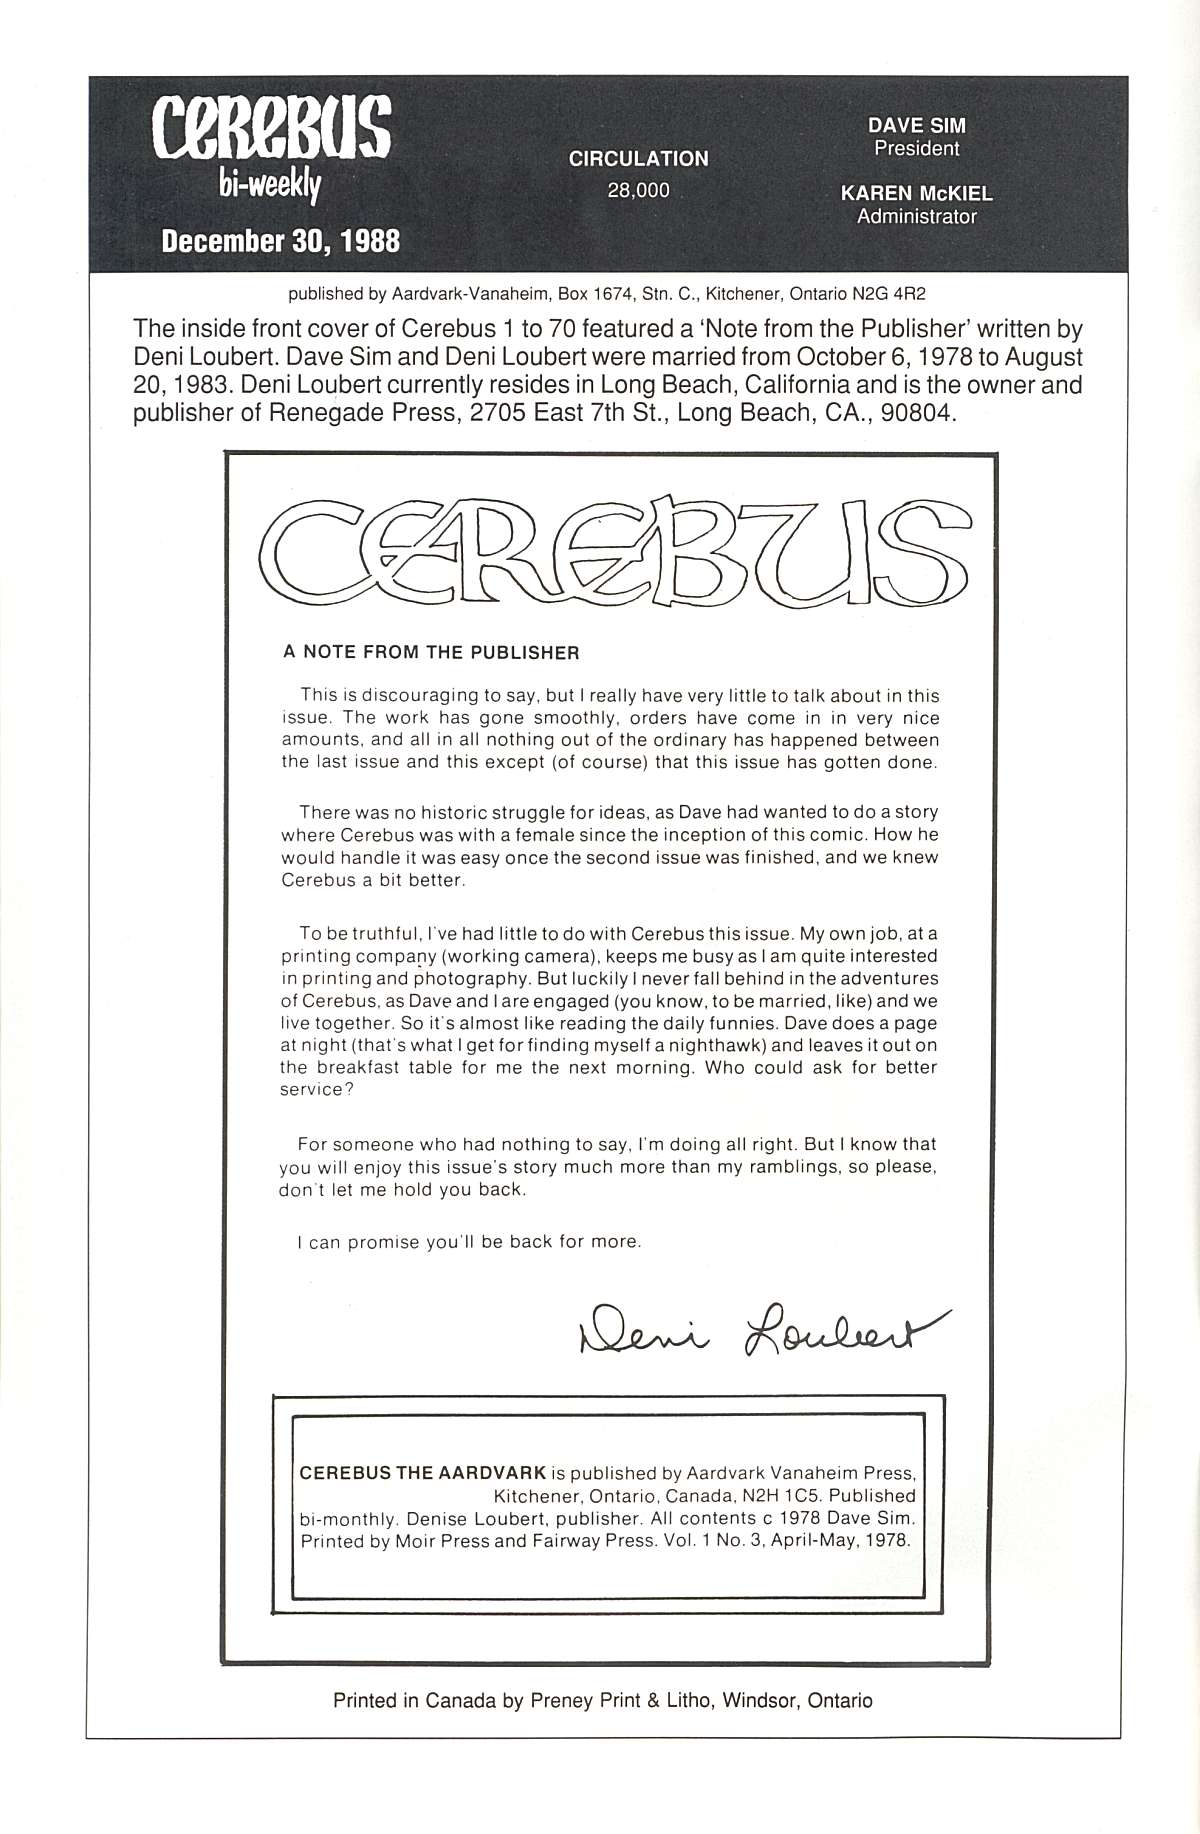 Read online Cerebus comic -  Issue #3 - 2